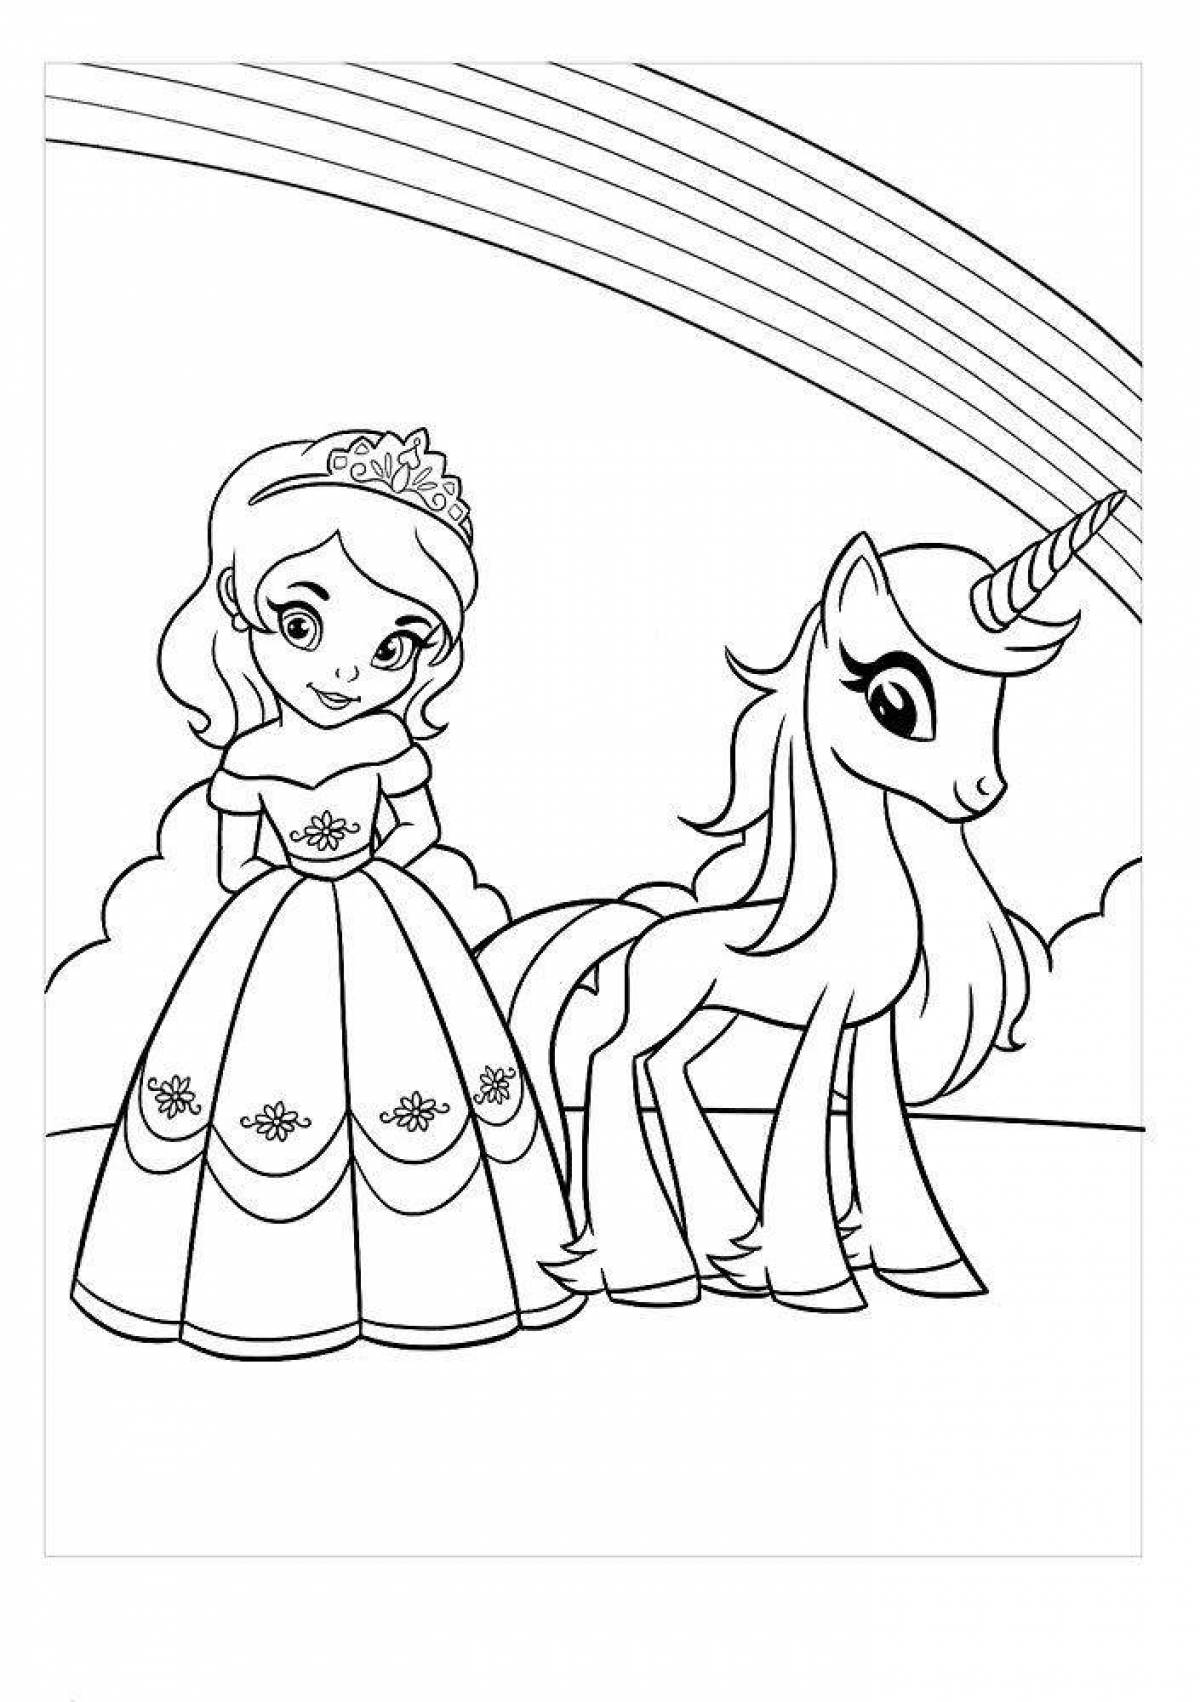 Adorable princess coloring with unicorn